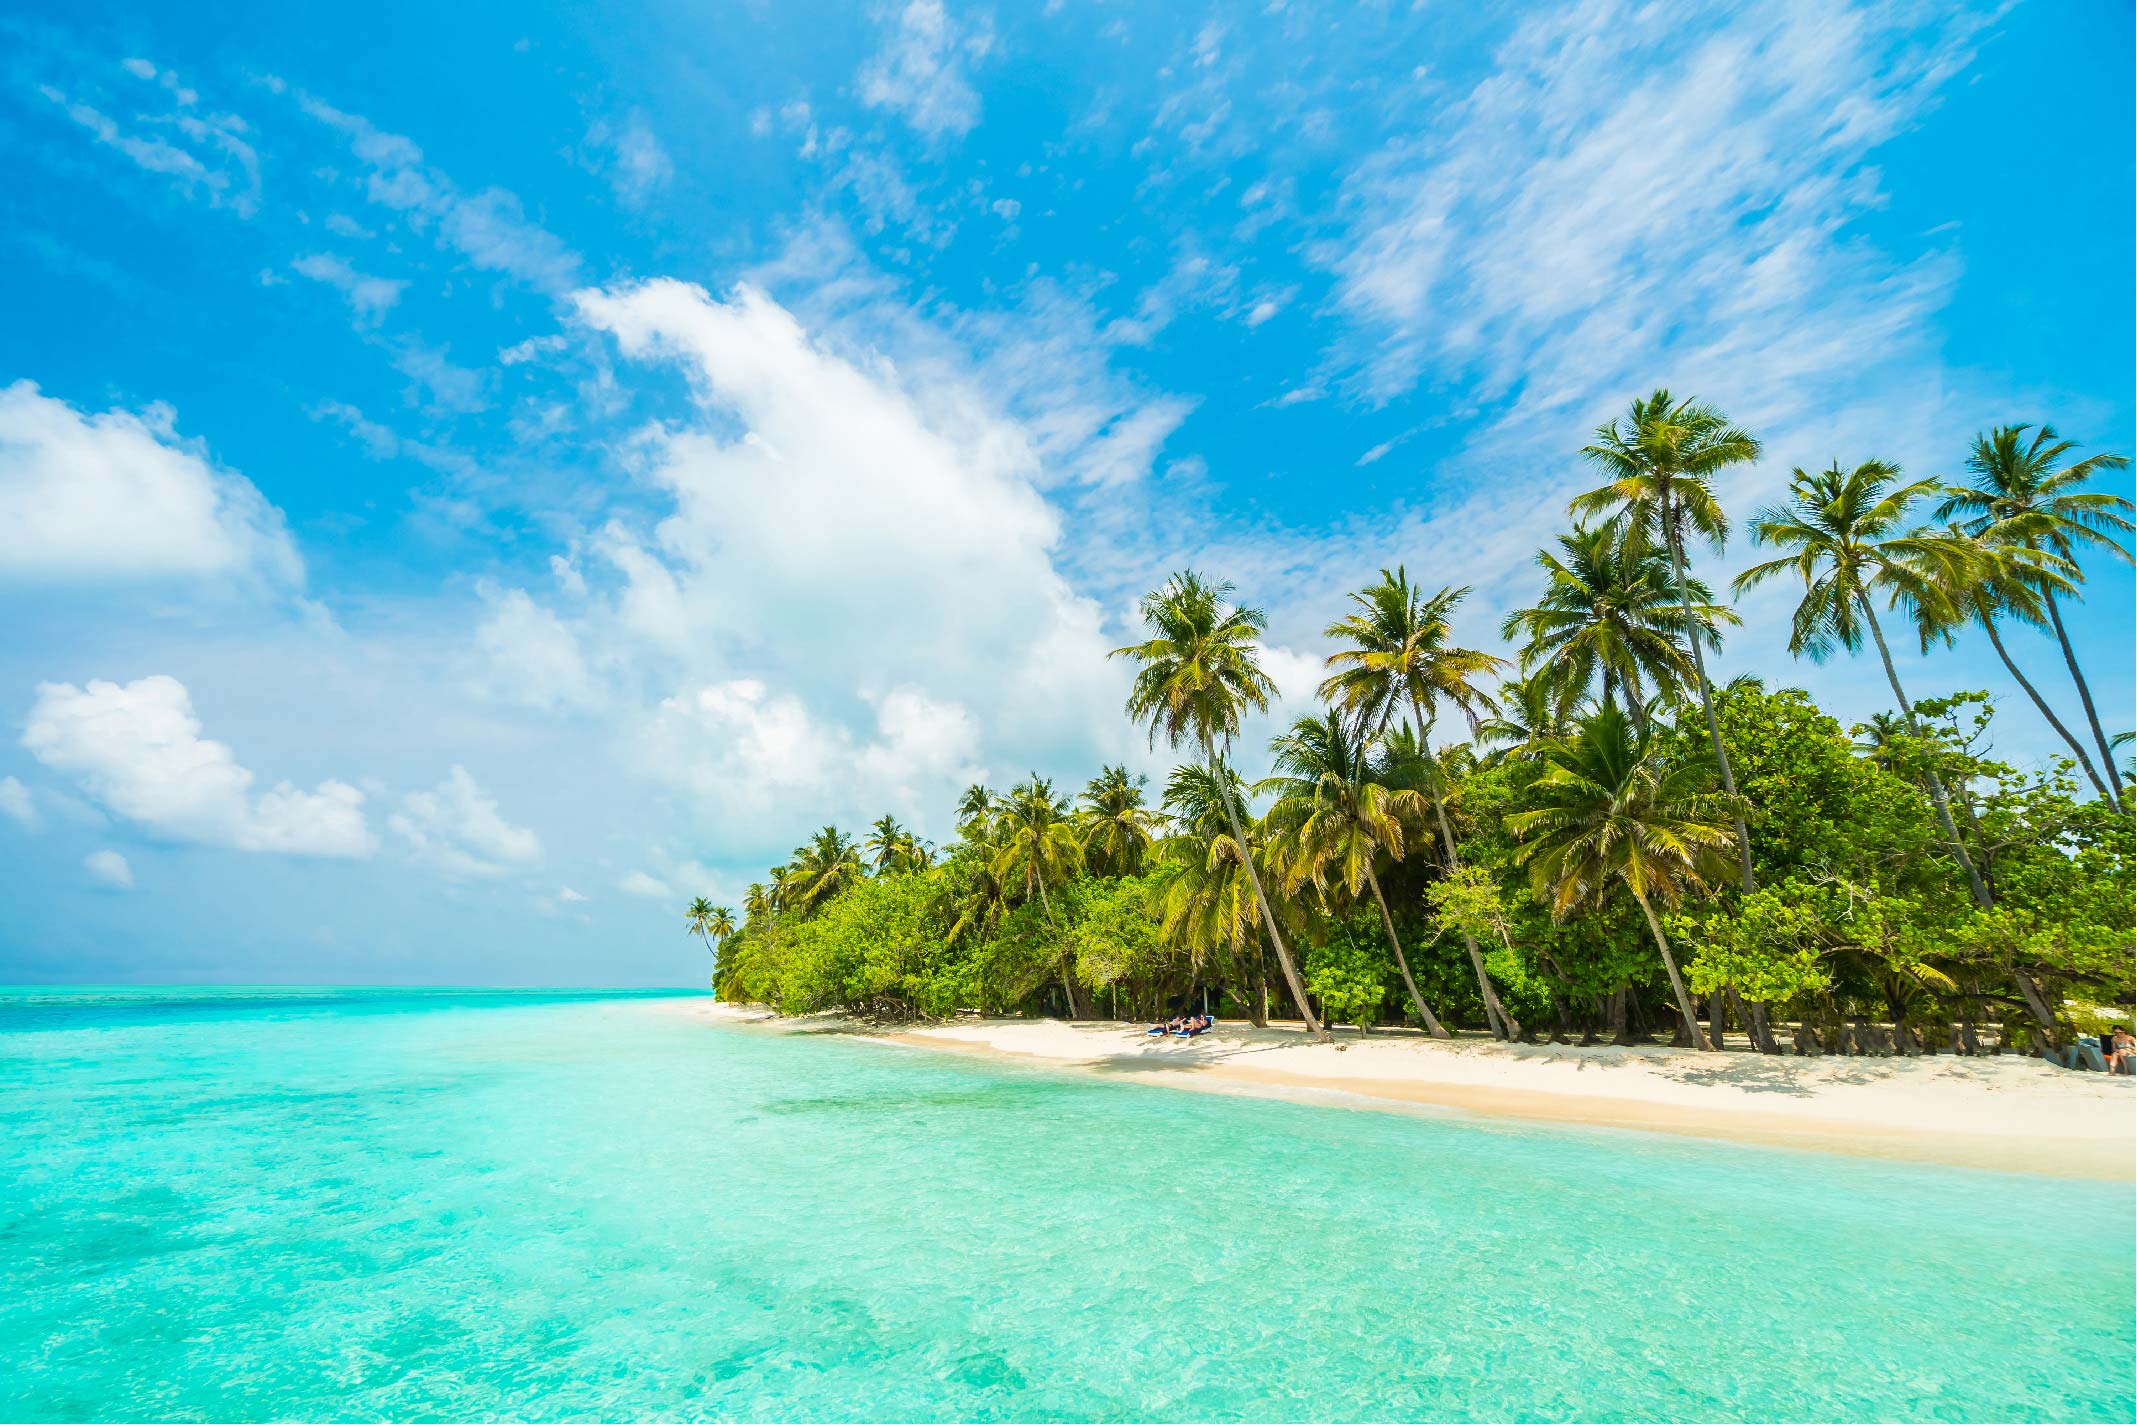 Island beach with palm trees